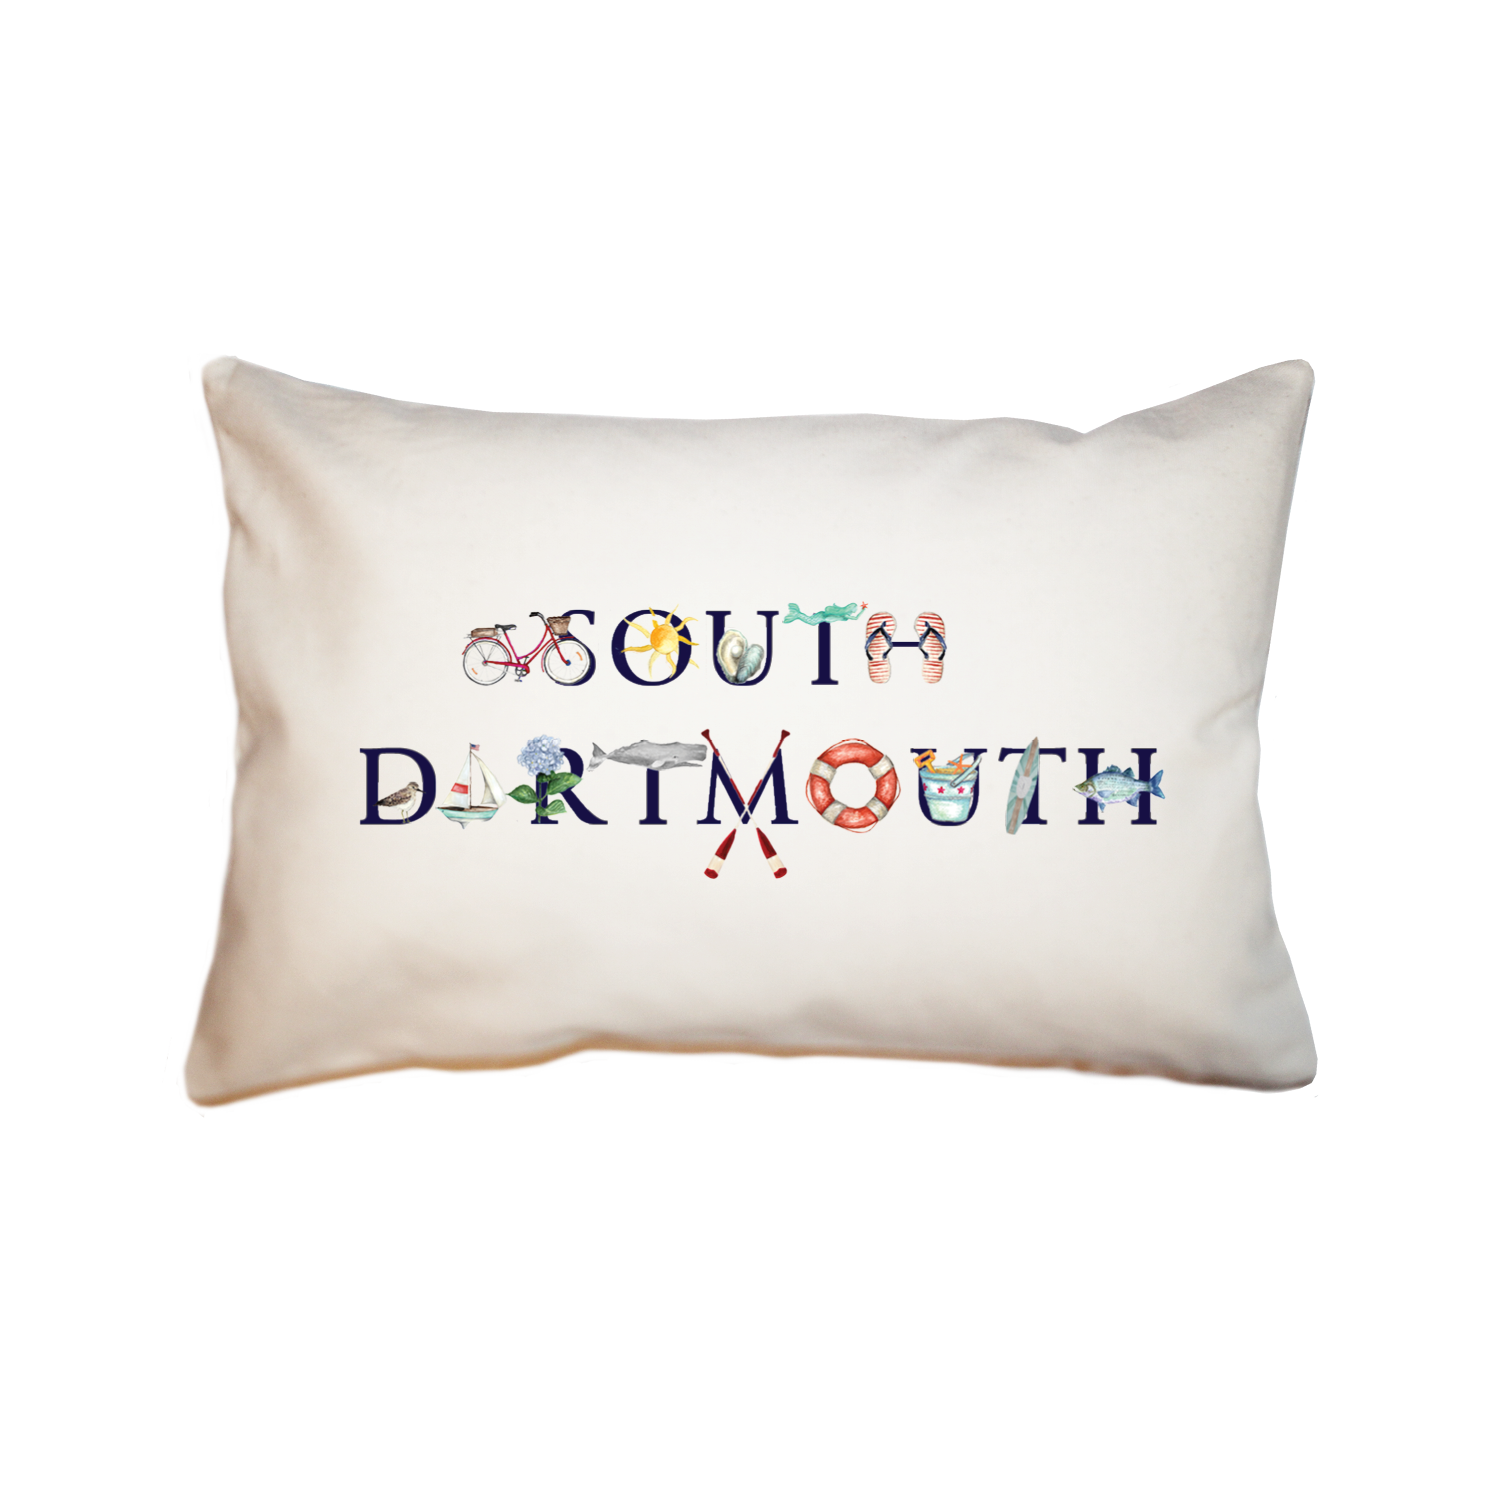 south dartmouth large rectangle pillow